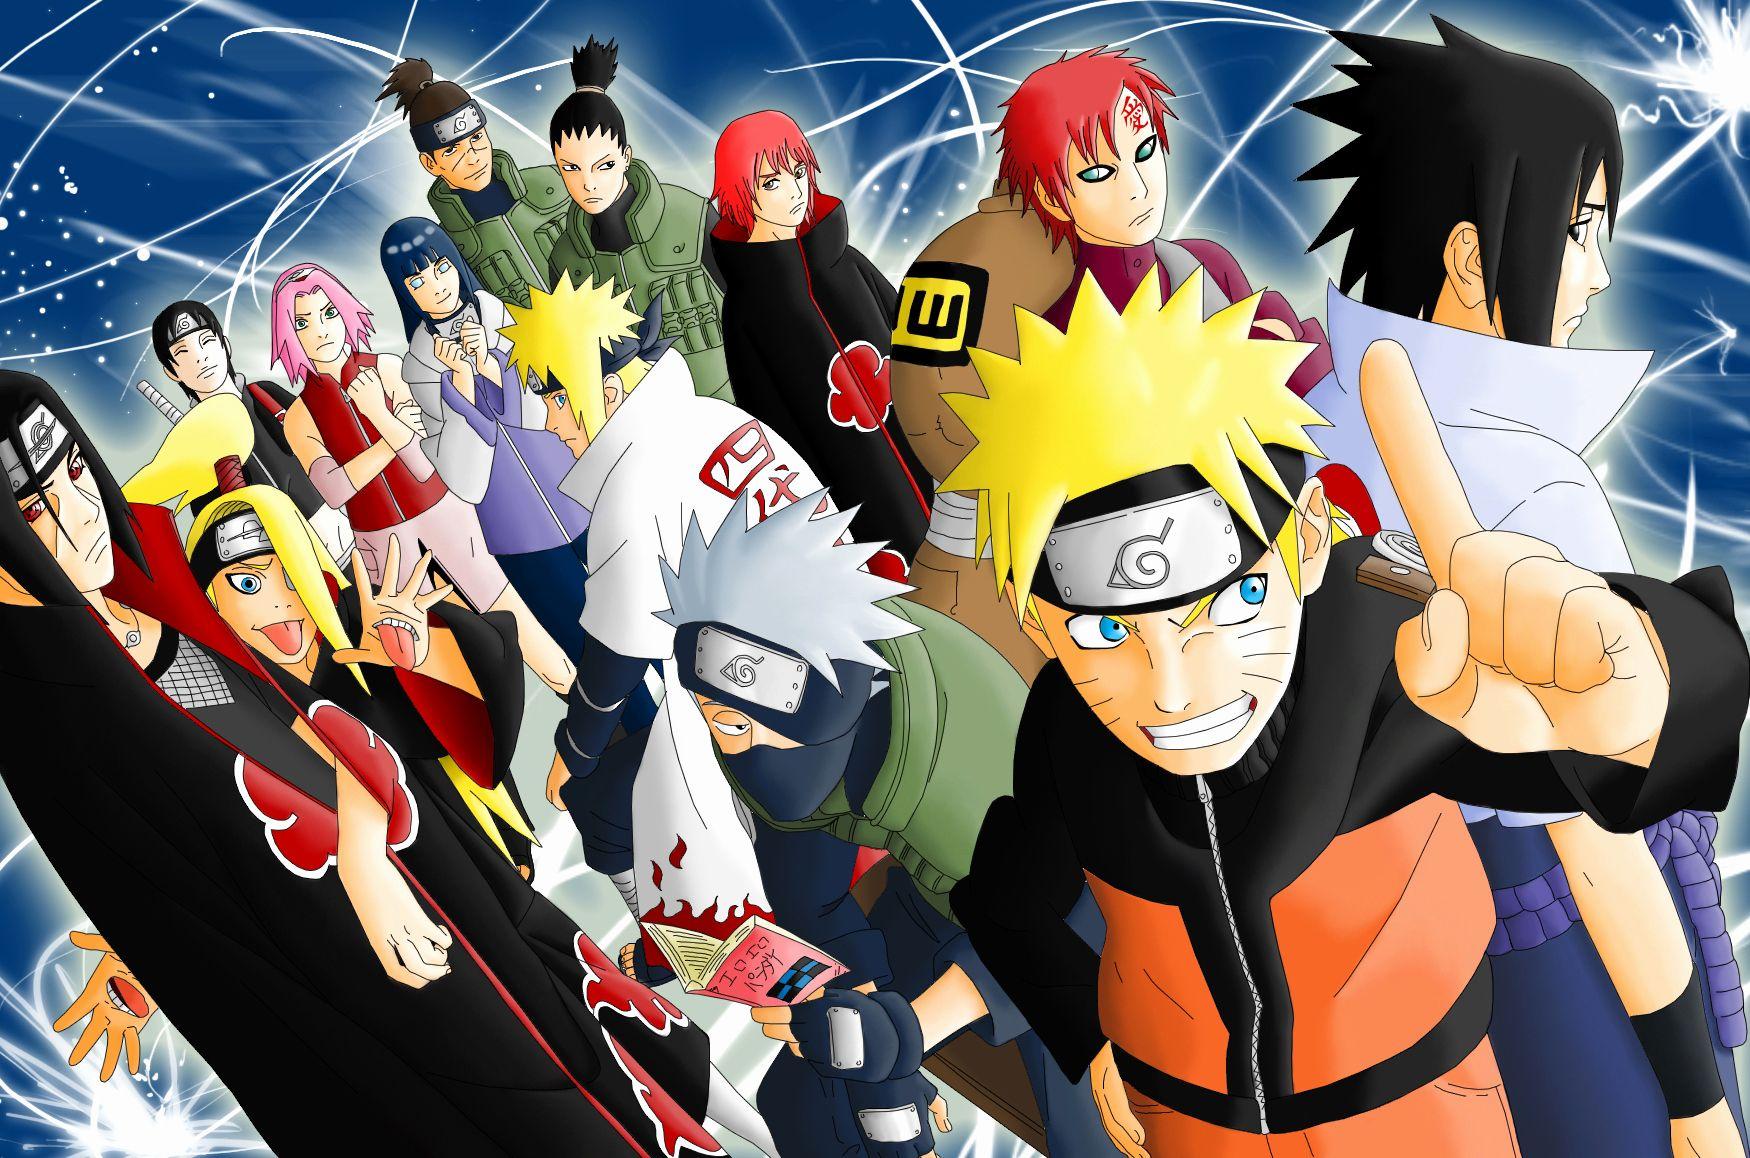 Personajes De Naruto Shippuden Personajes De Naruto Personajes De Anime